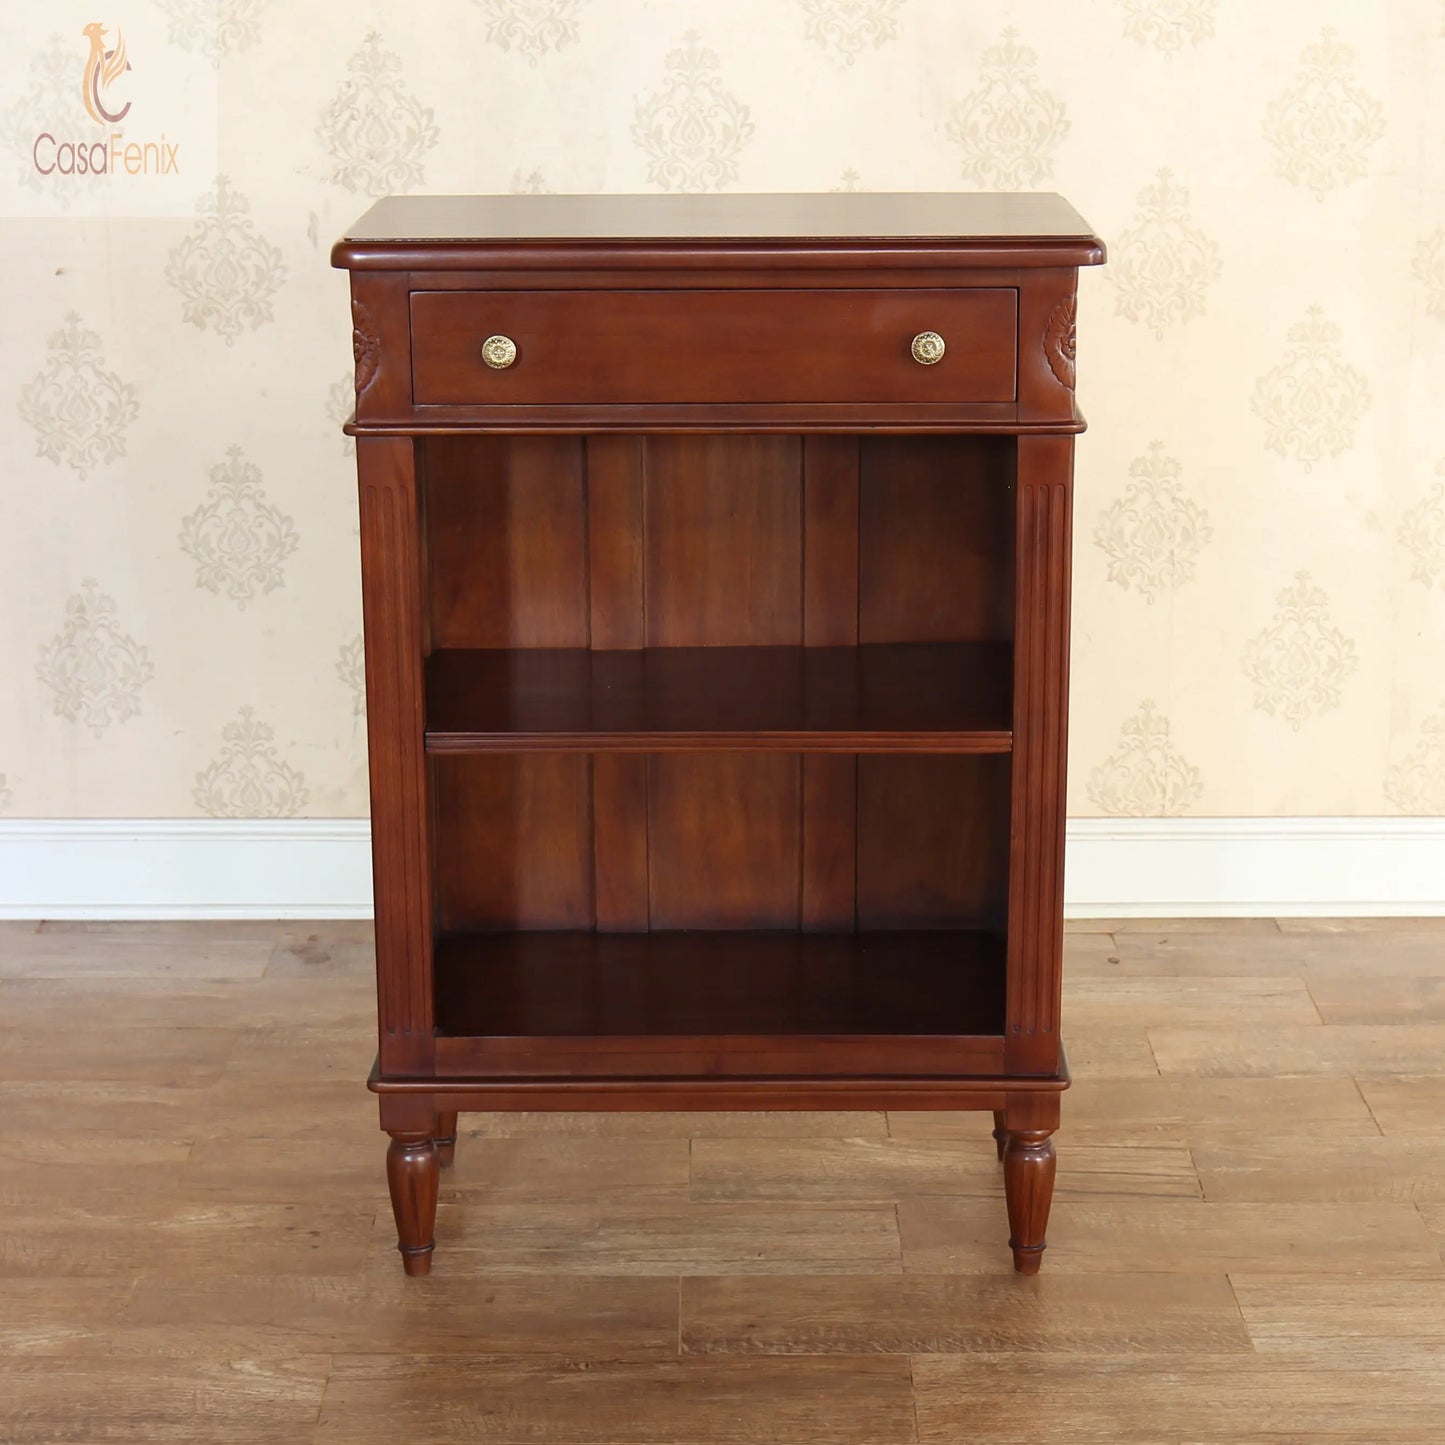 Petite Solid Mahogany Victorian Bookcase 1 Fixed Shelf & 1 Drawer CasaFenix